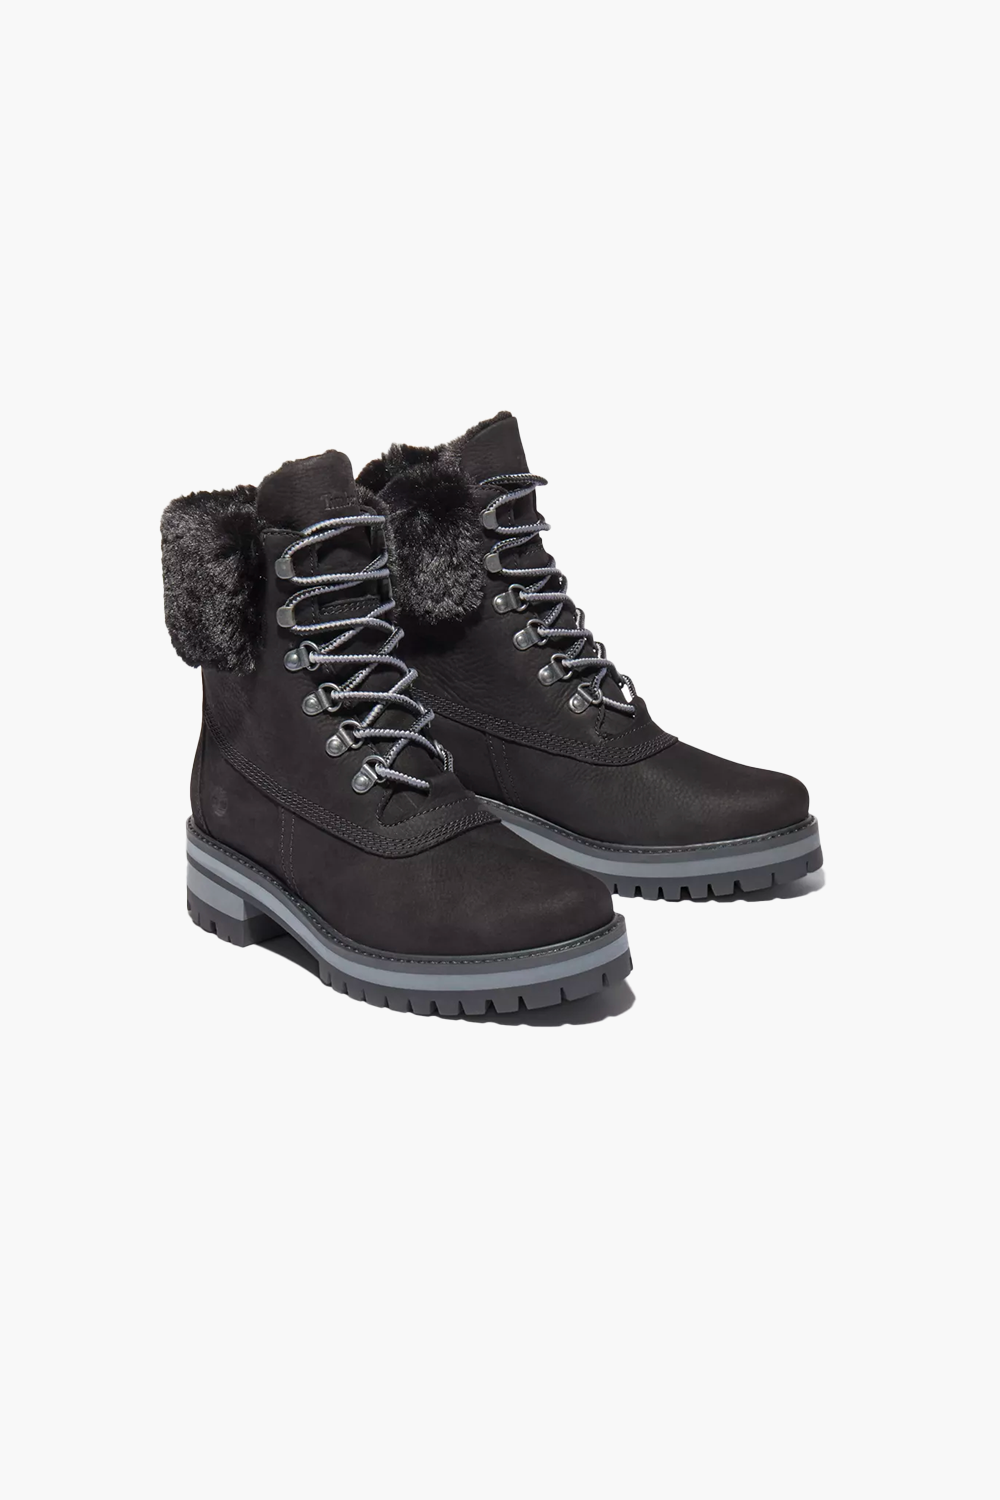 Timberland Women's Courmayeur Valley 6-inch Waterproof Faux-Fur Boots in Black TB0A2JQD001